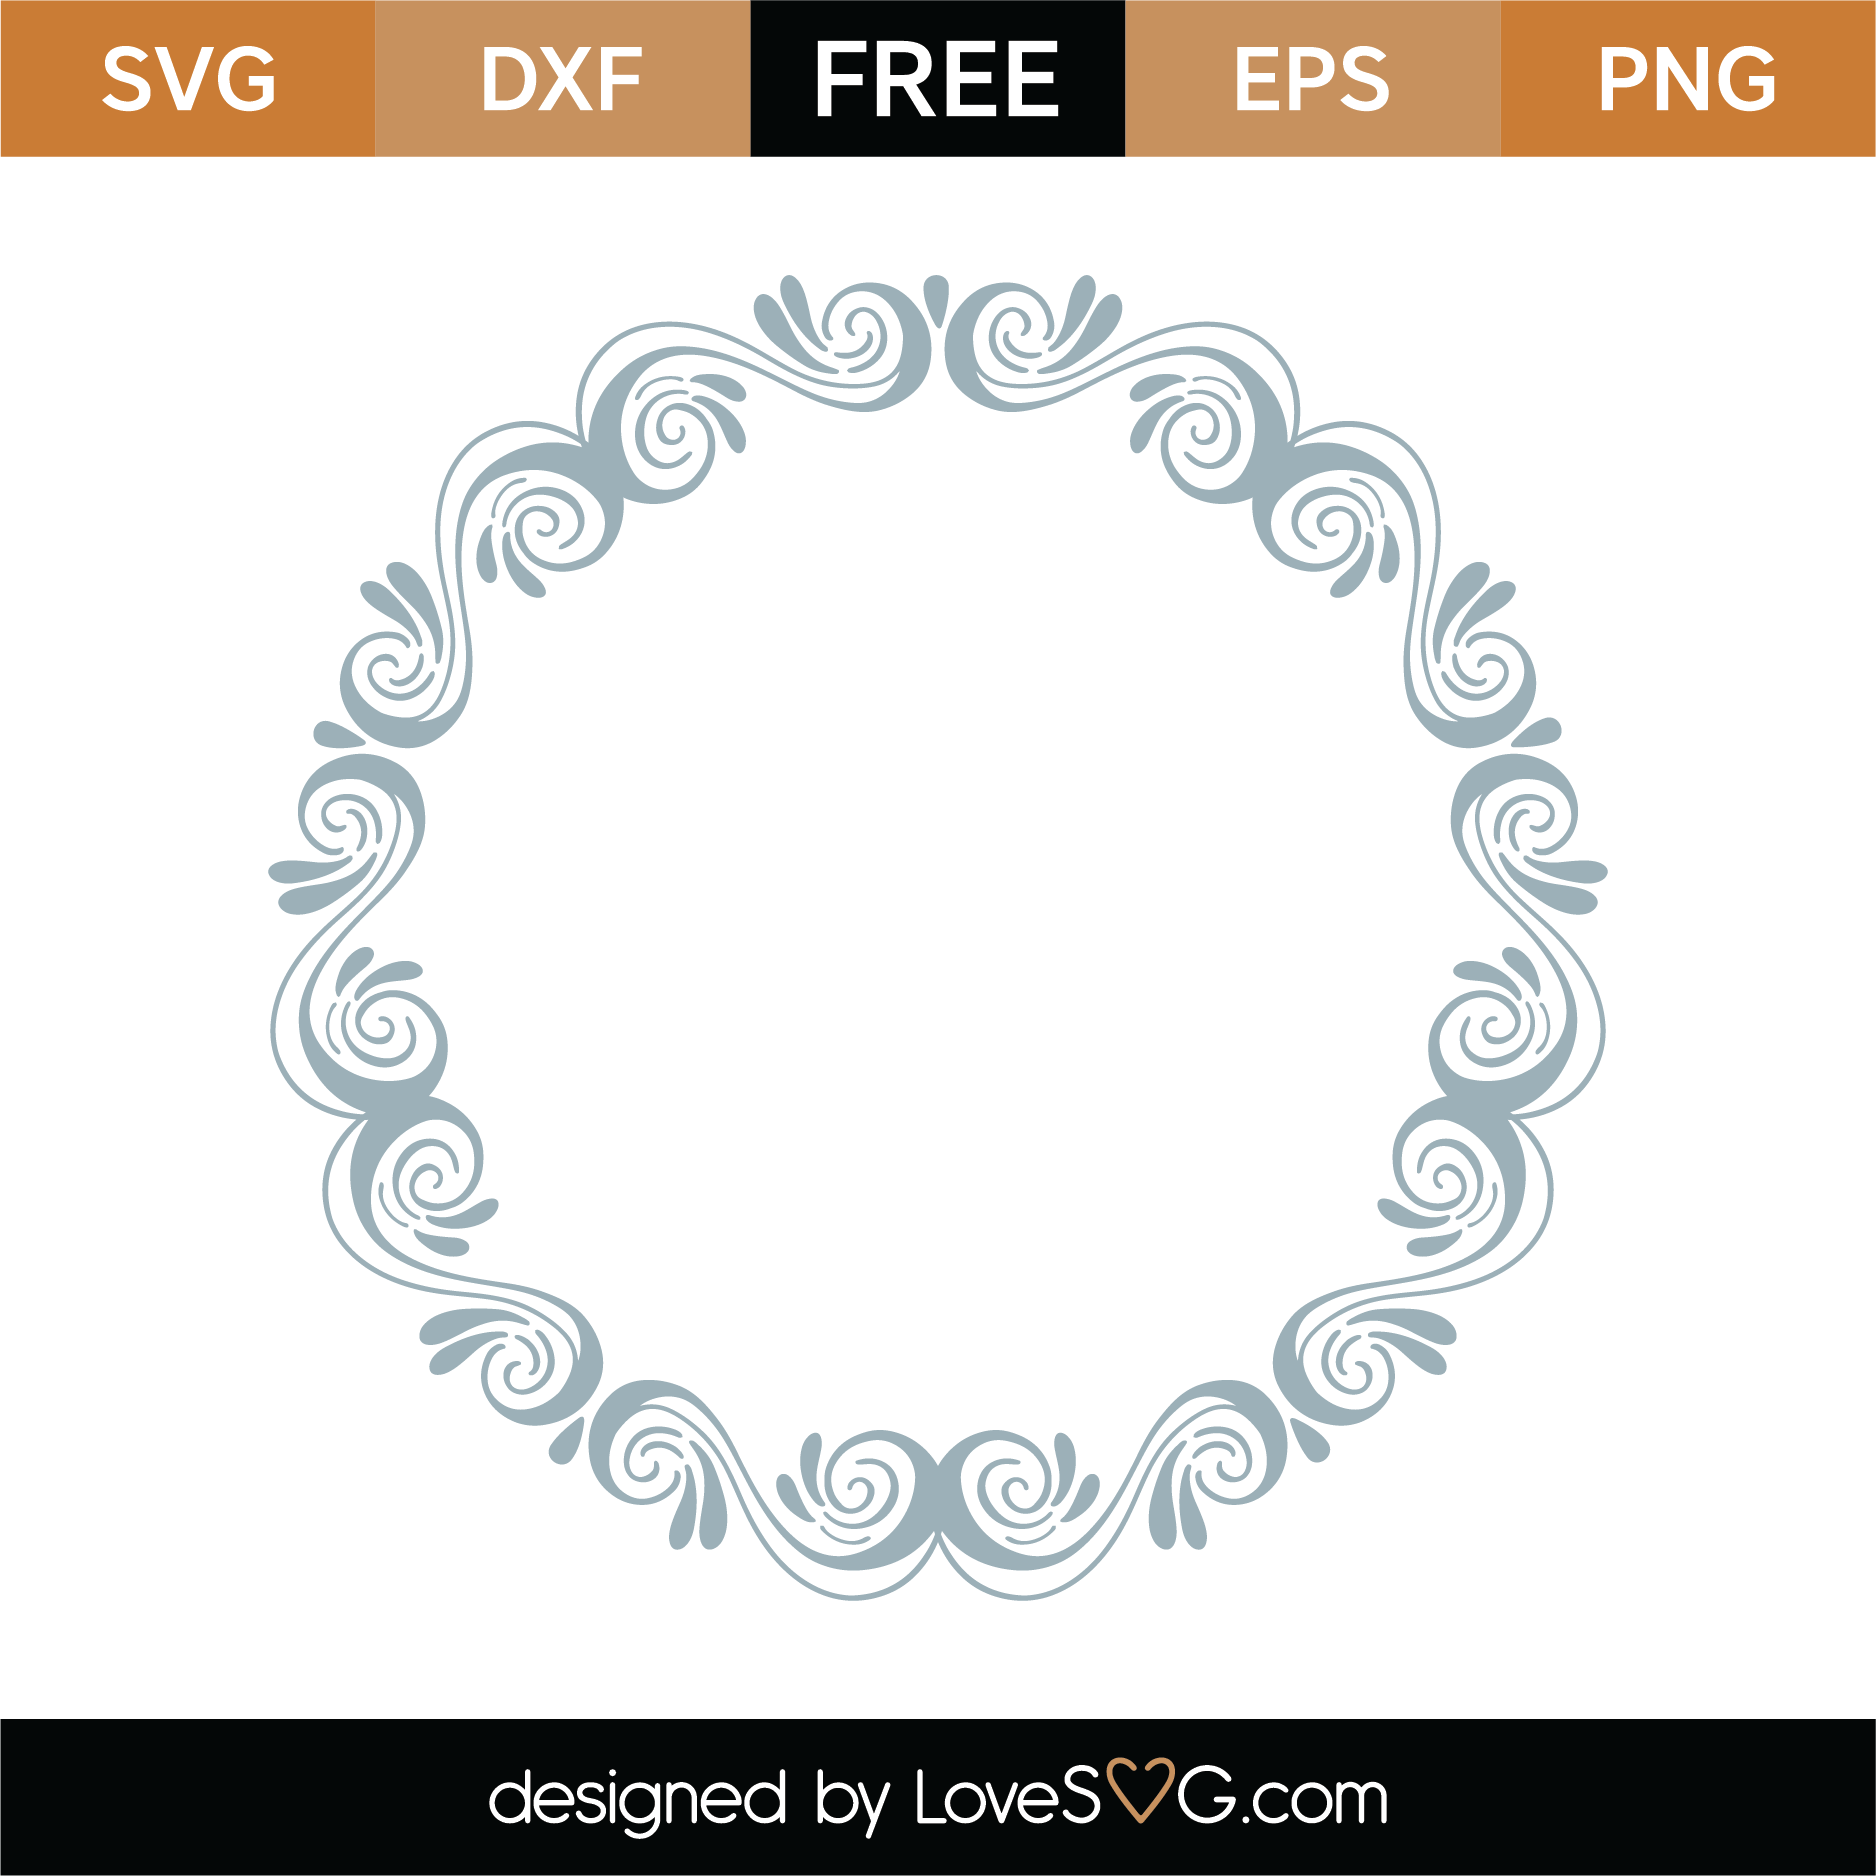 Free Monogram Frame SVG Cut File | Lovesvg.com